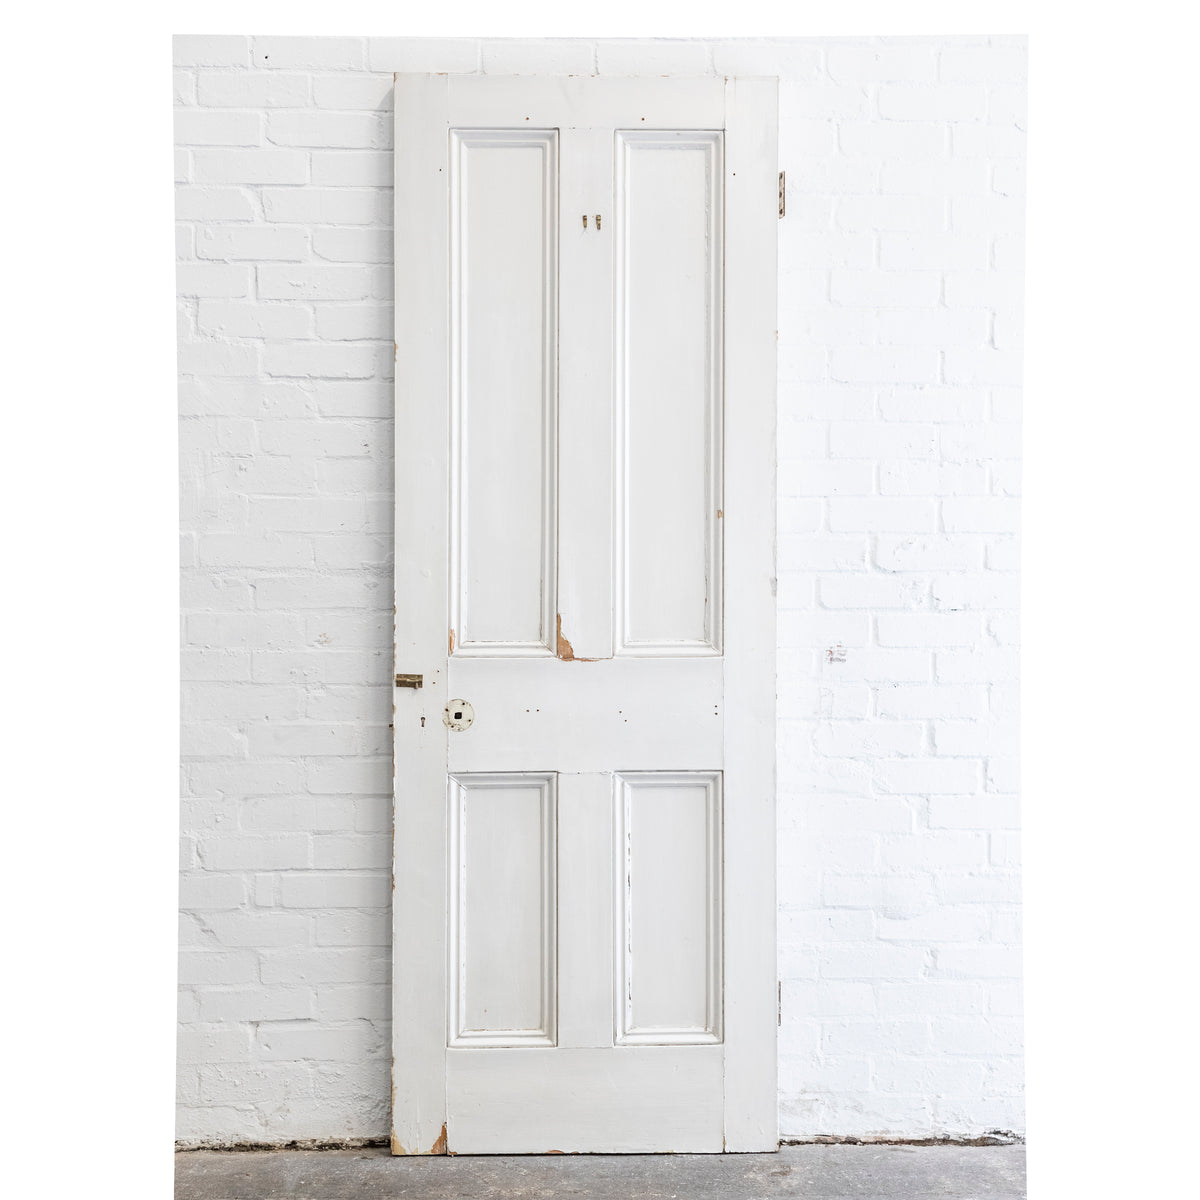 Antique Reclaimed Victorian 4 Panel Door - 211.5cm x 75.5cm | The Architectural Forum